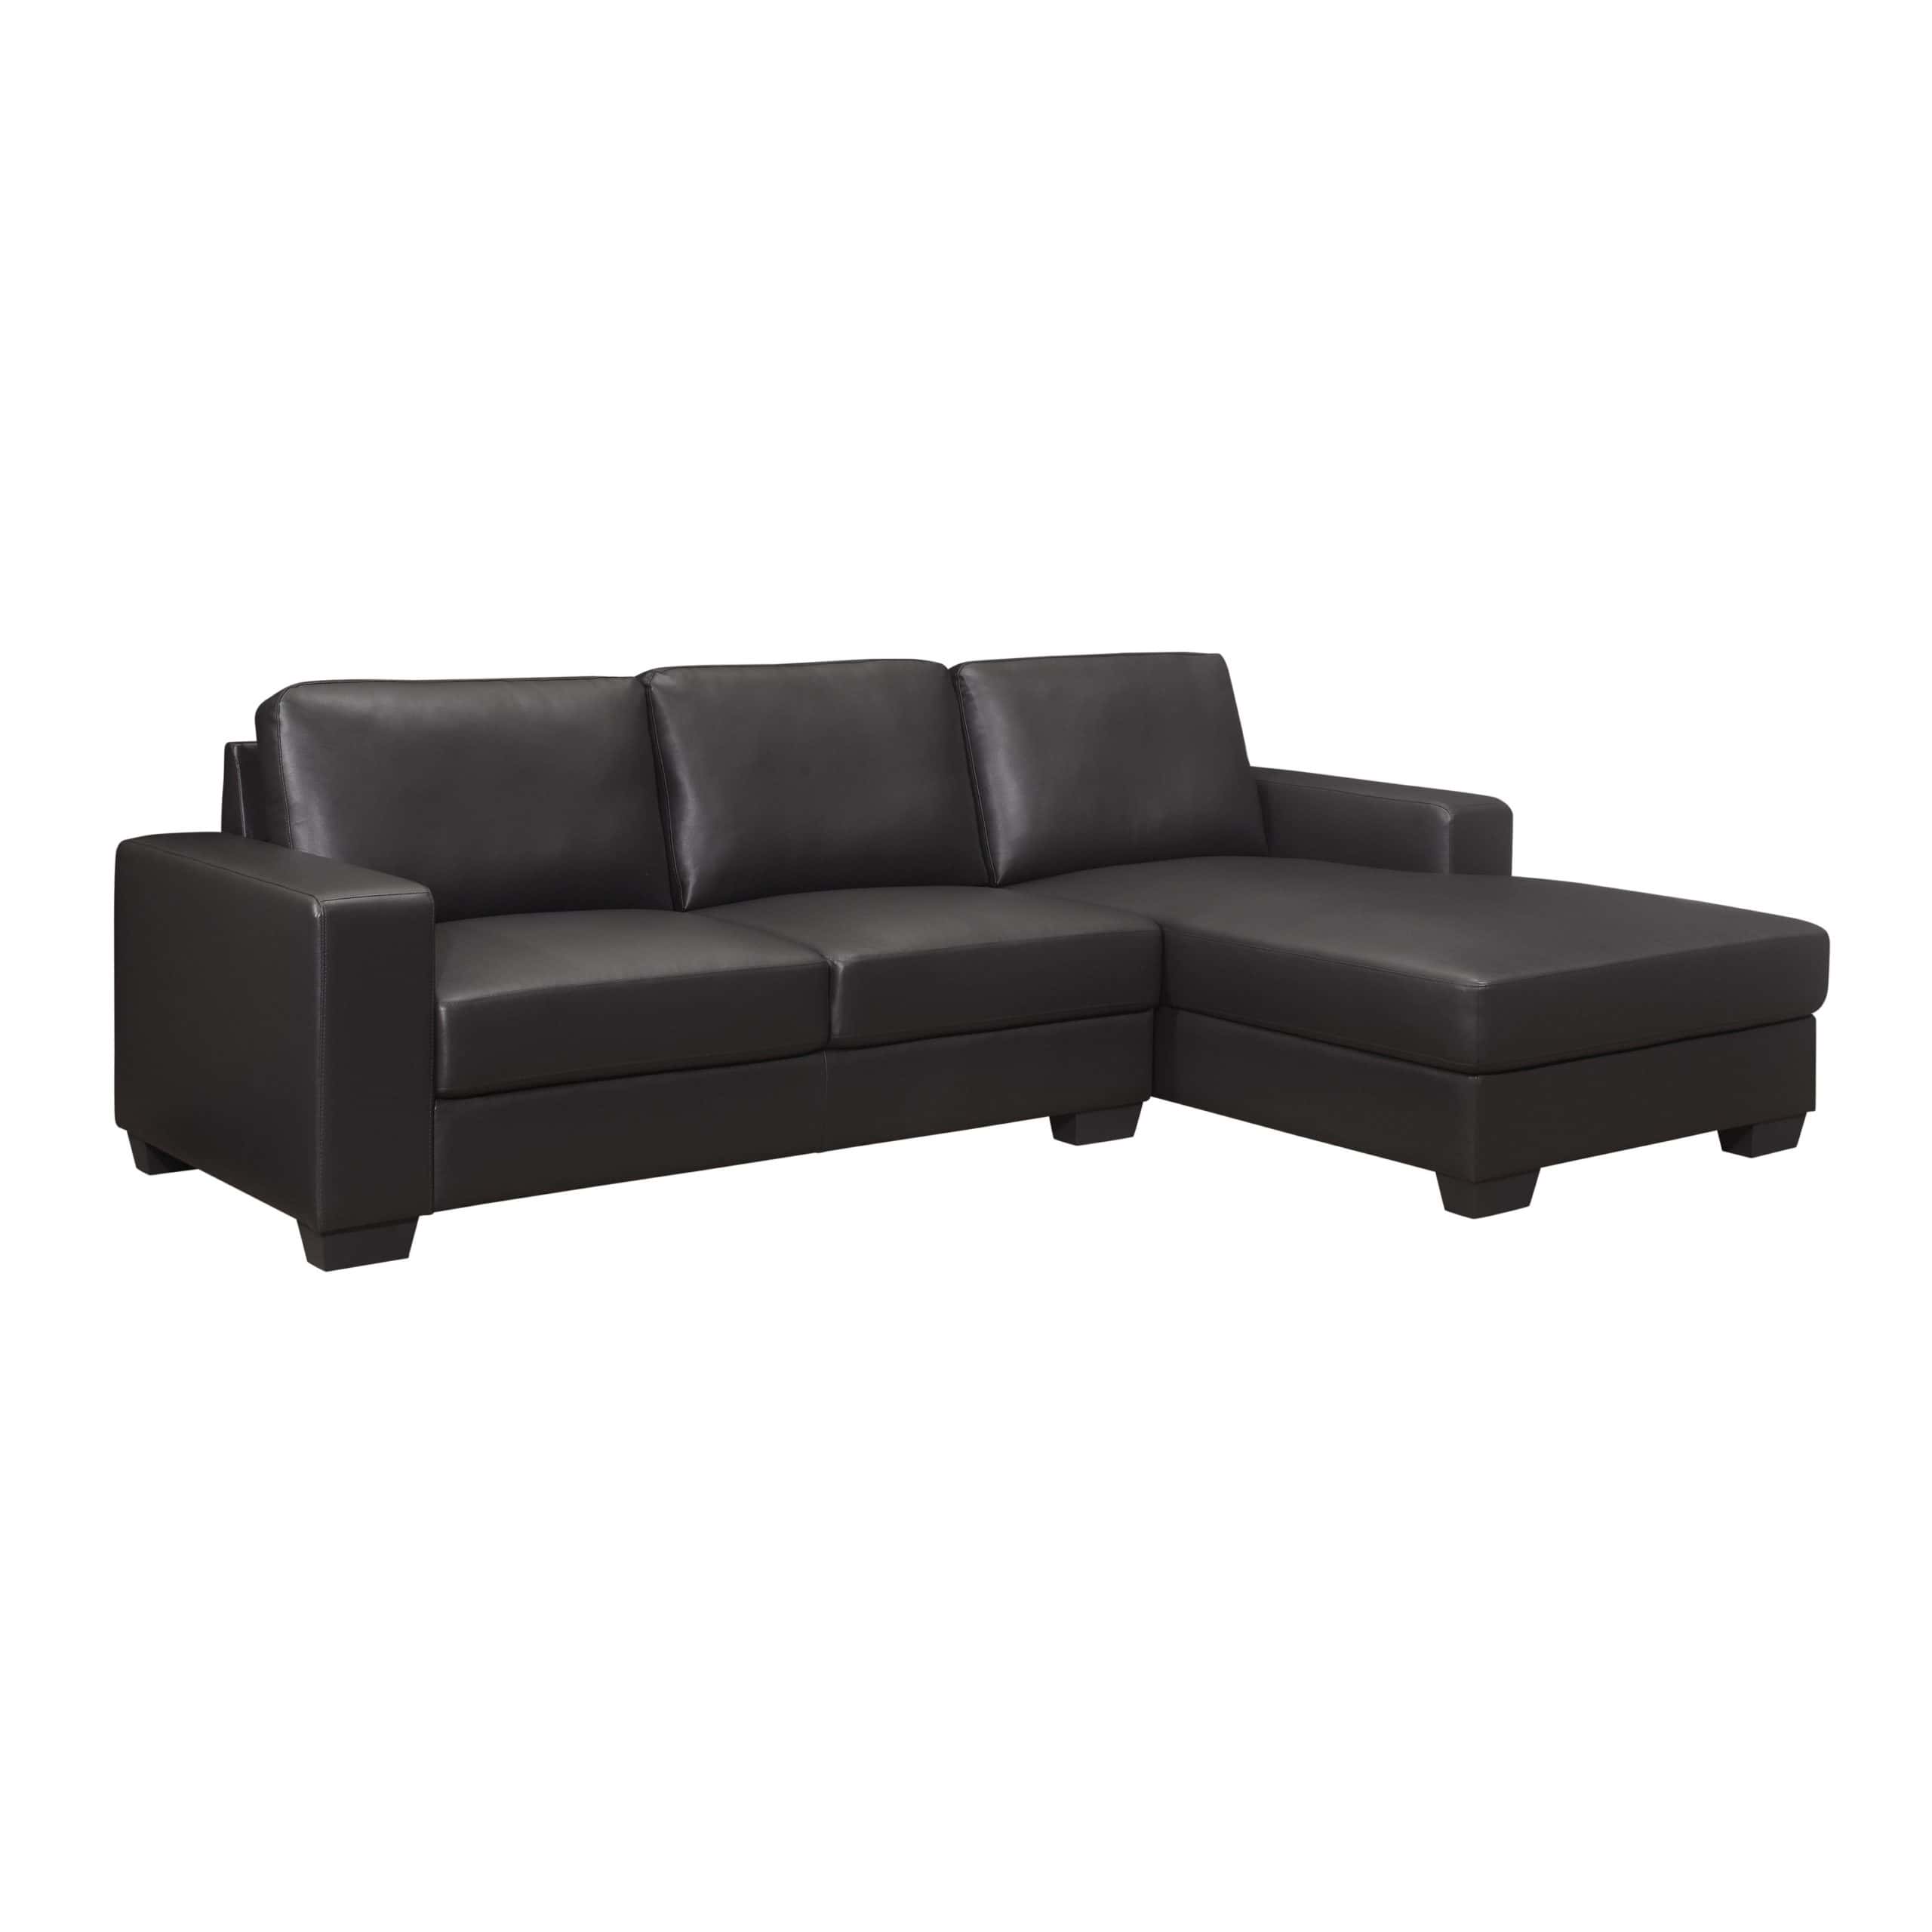 U821 Dark Grey PVC Sectional by Global Furniture